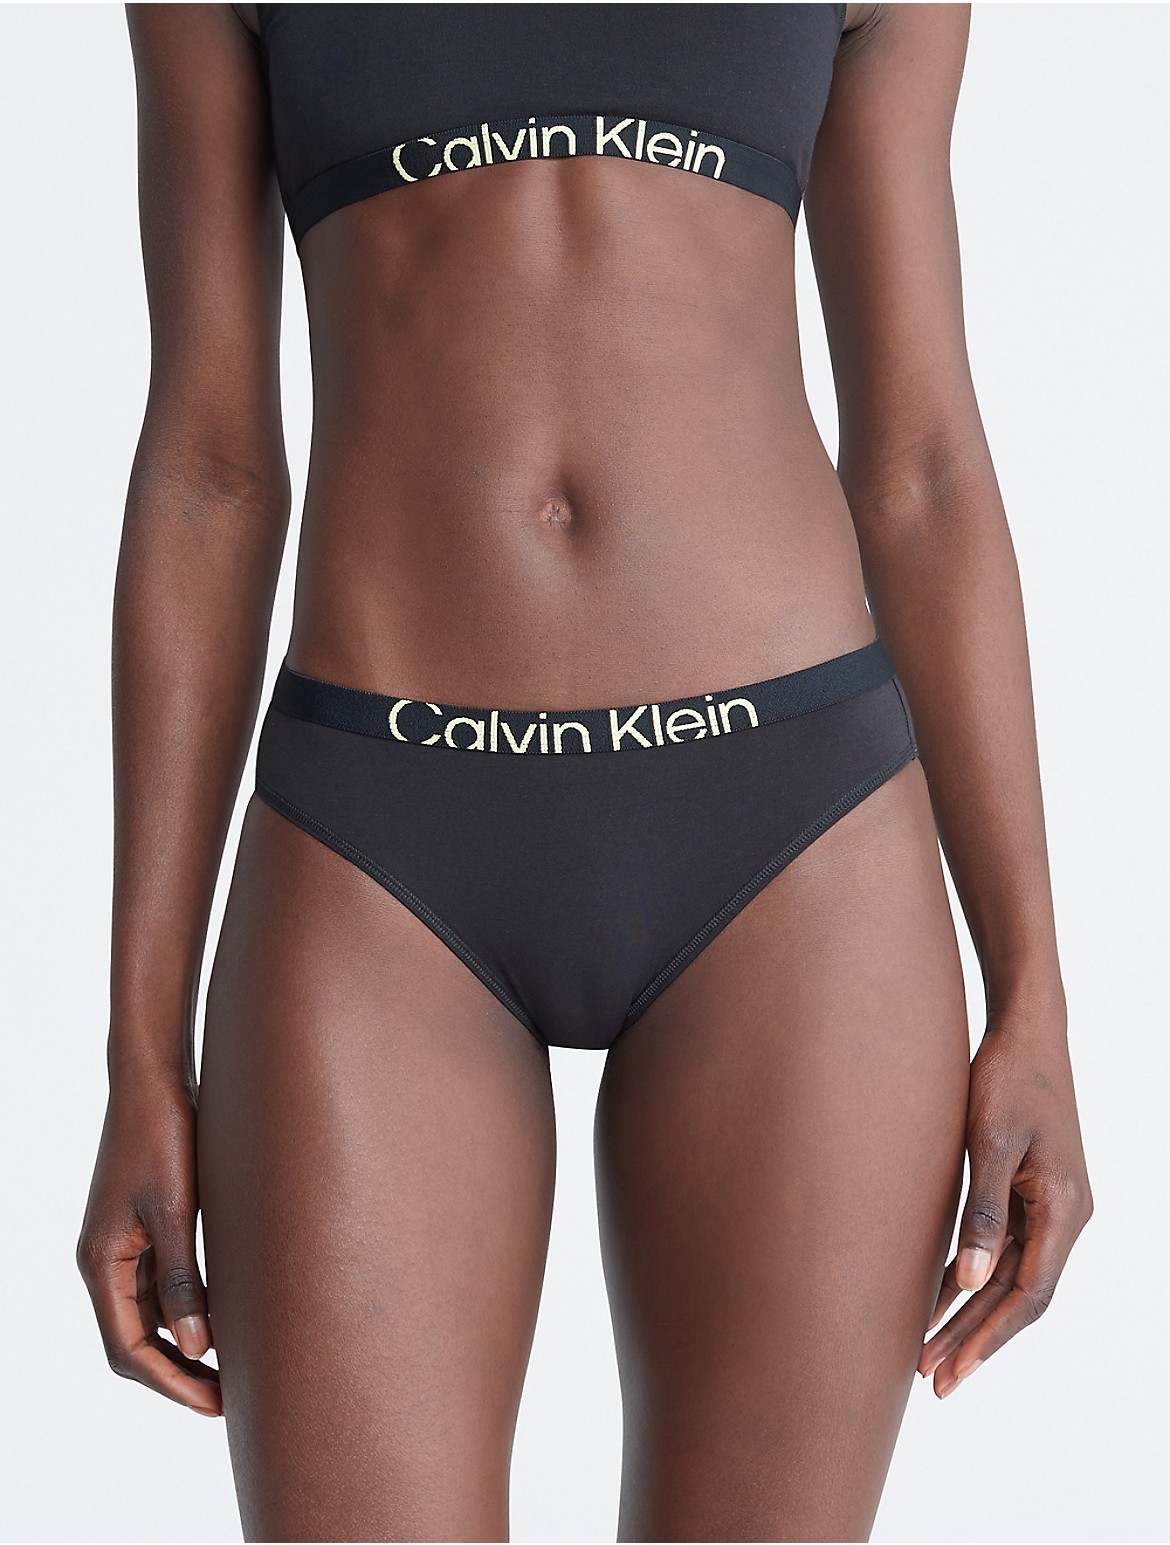 Calvin Klein Women's Future Shift Bikini - Black - XS